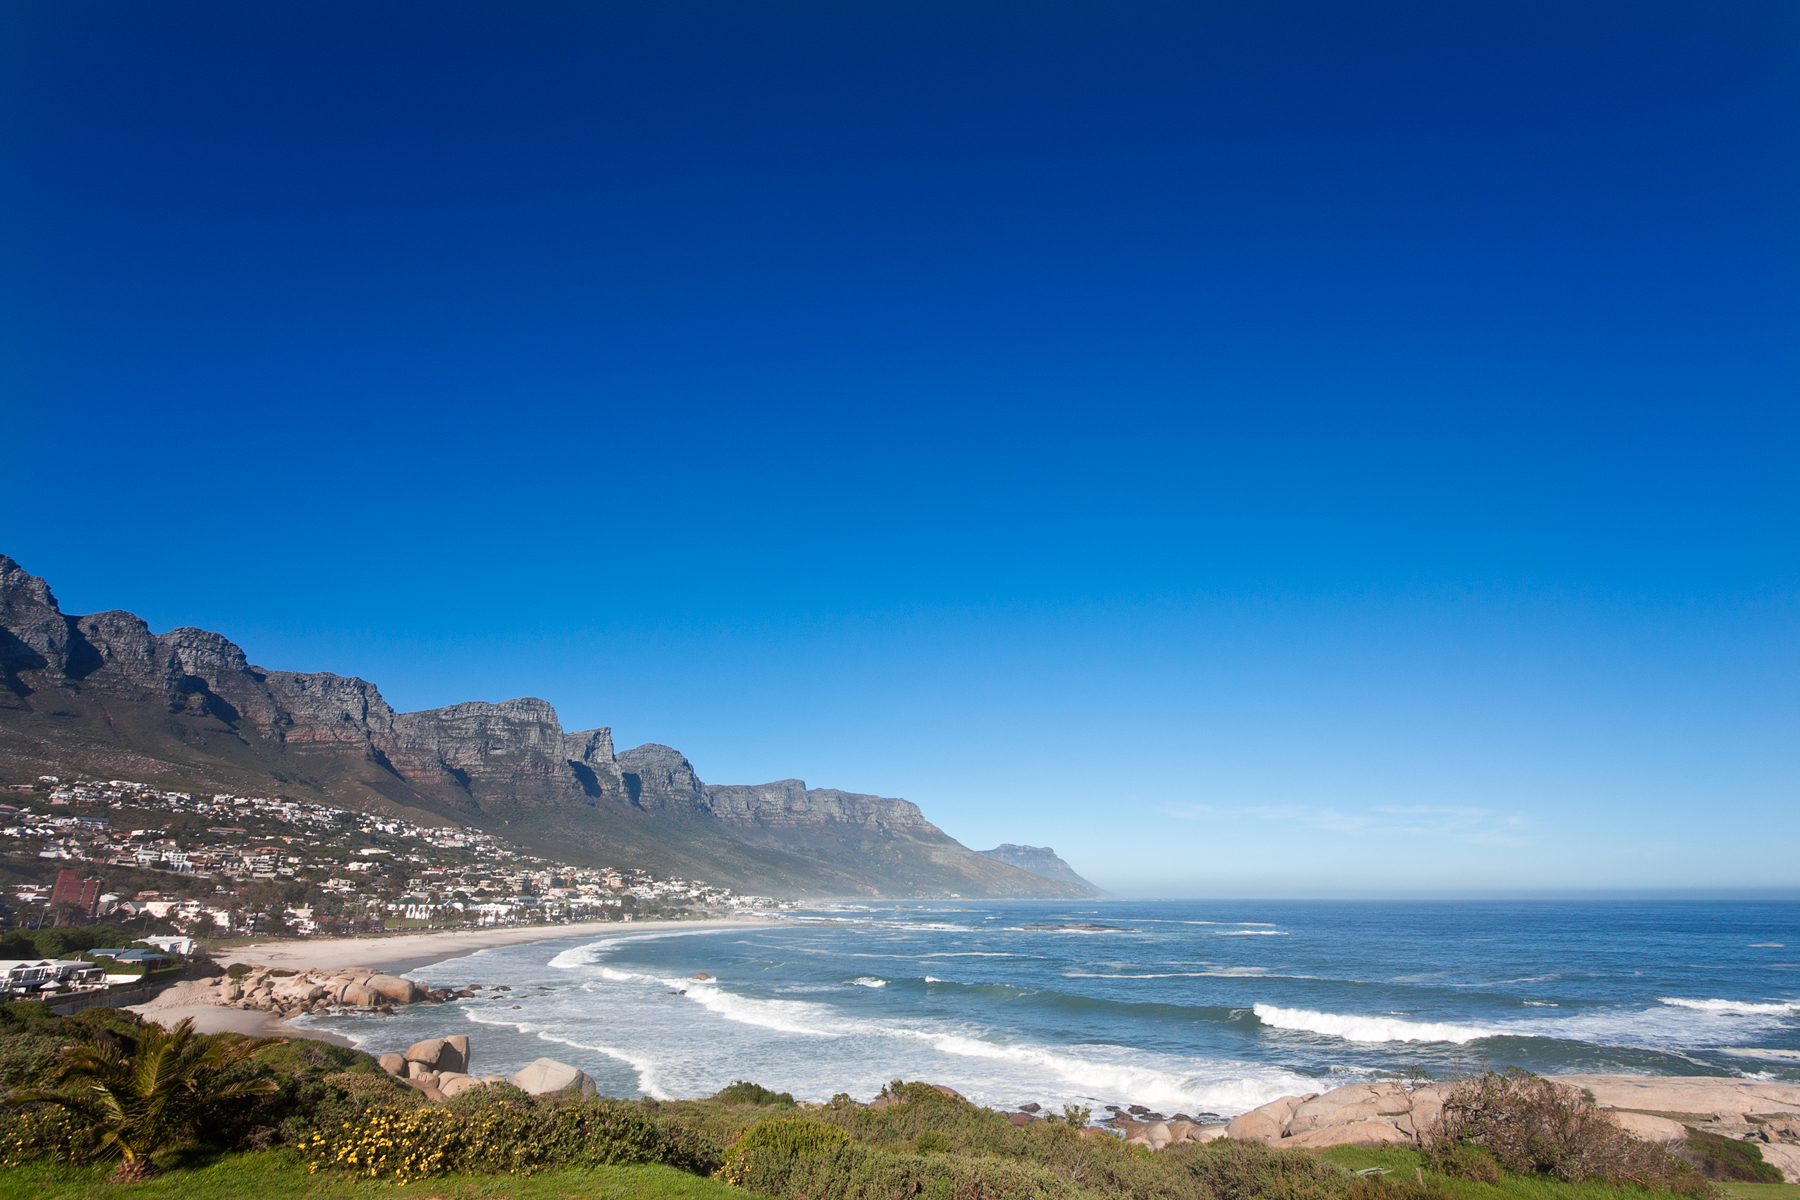 Cape town coastal scenery photo